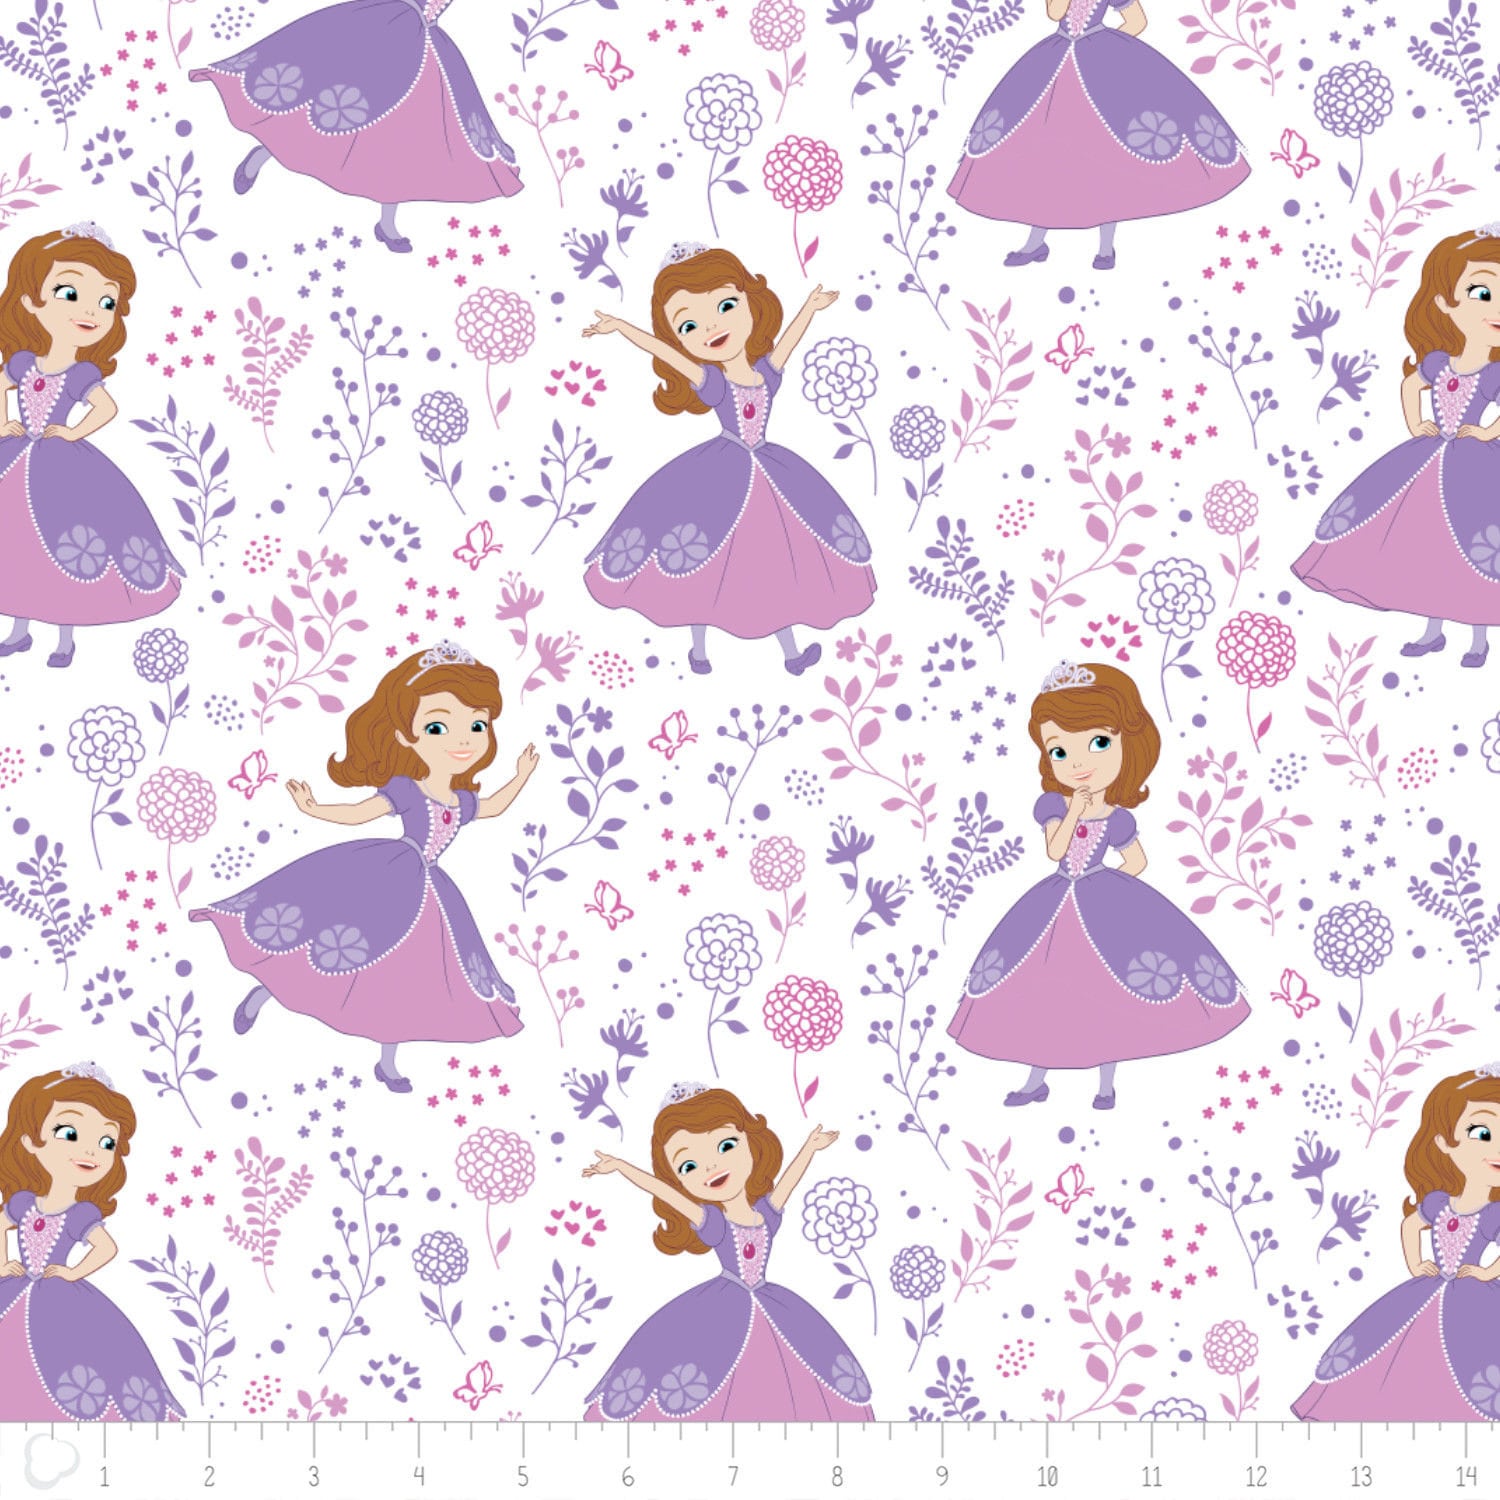 100+] Princess Sofia Wallpapers | Wallpapers.com